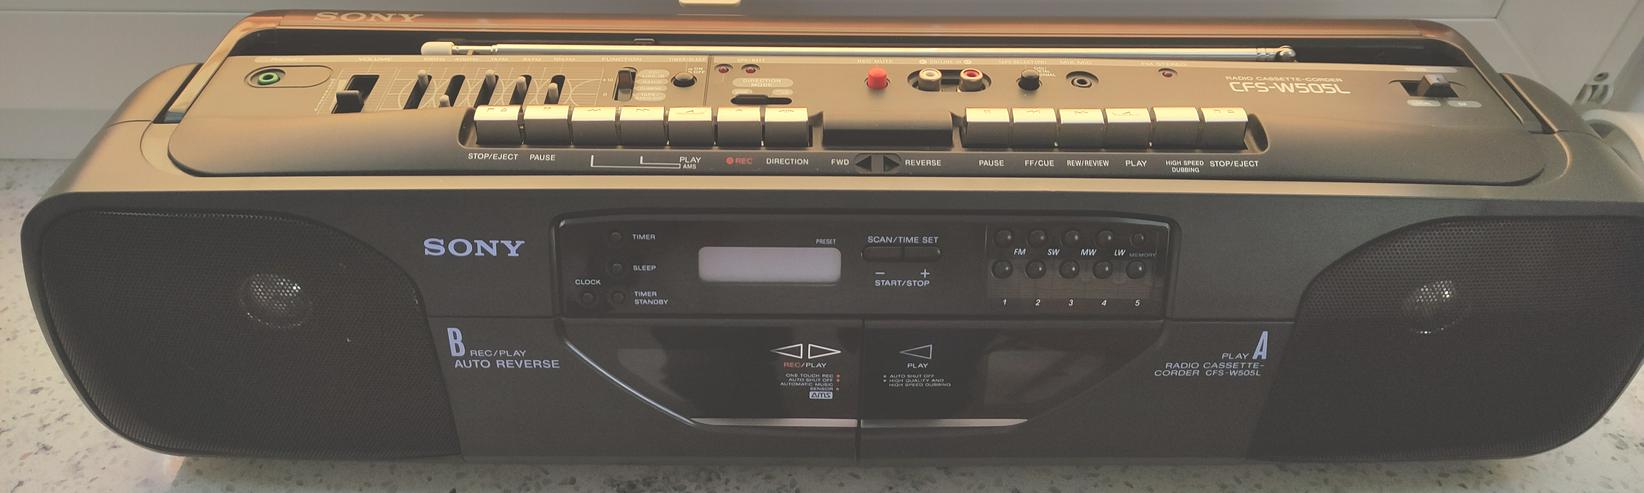 Bild 1: Radio-Doppel-Cassettenrekorder Sony